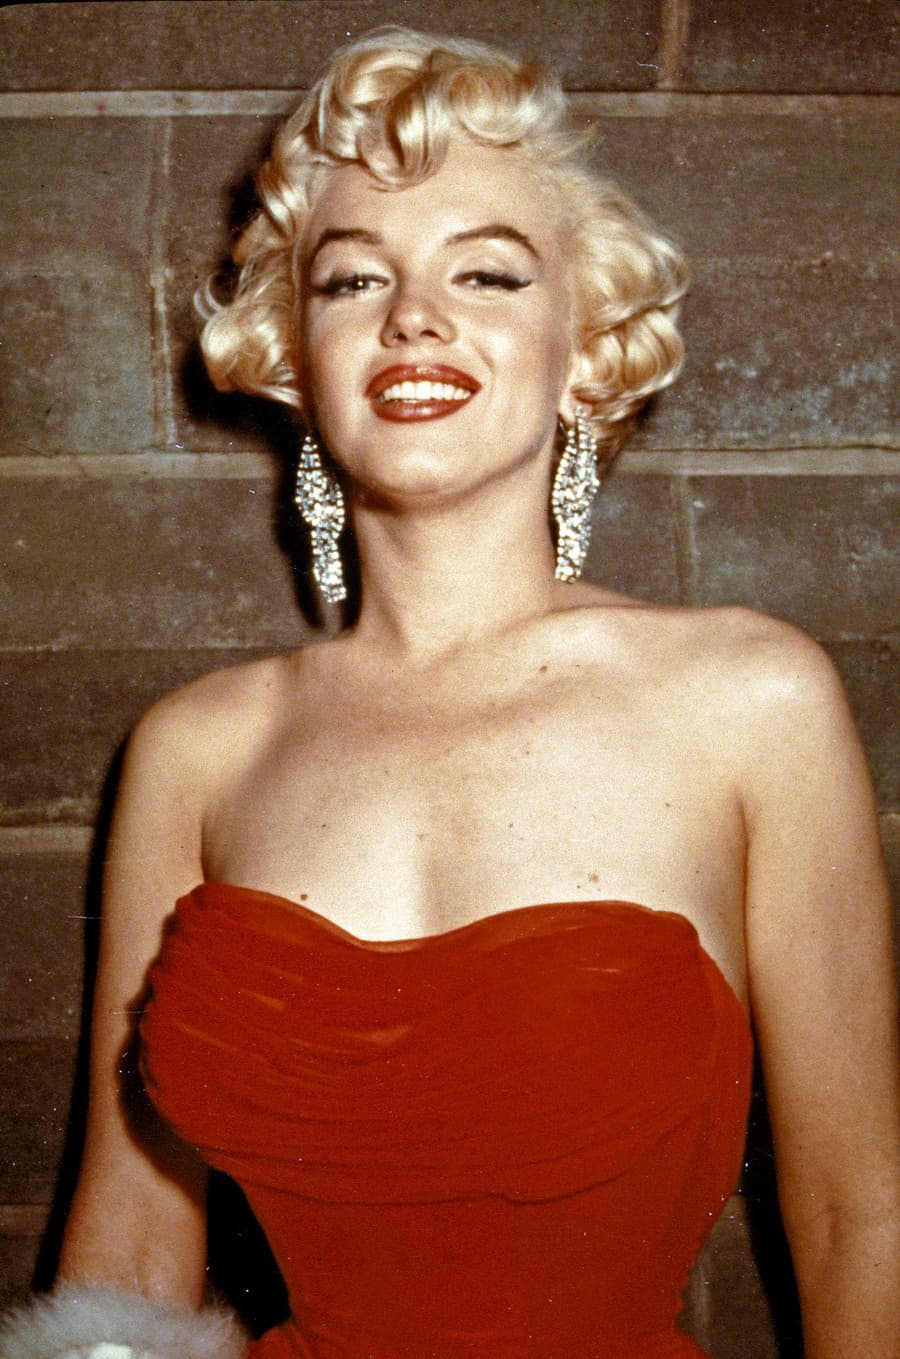 Monroe zomrela 4. augusta